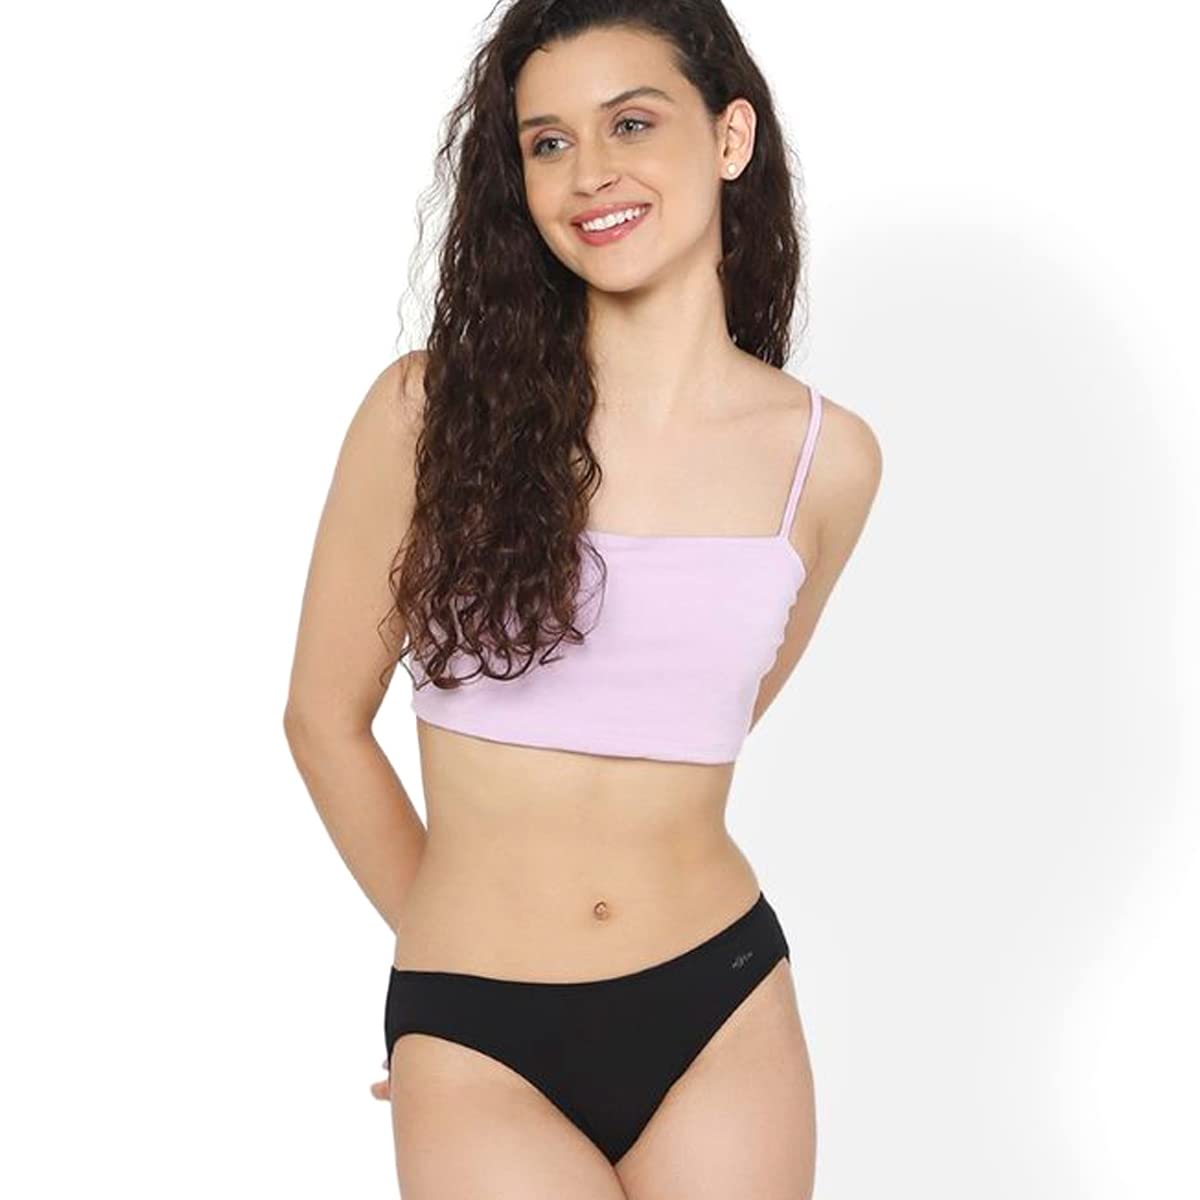 Mush Womens Ultra Soft Bamboo Modal Bikini Brief || Breathable Panties || Anti-Odor, Seamless, Anti Microbial Innerwear Pack of 3 (M, Black)